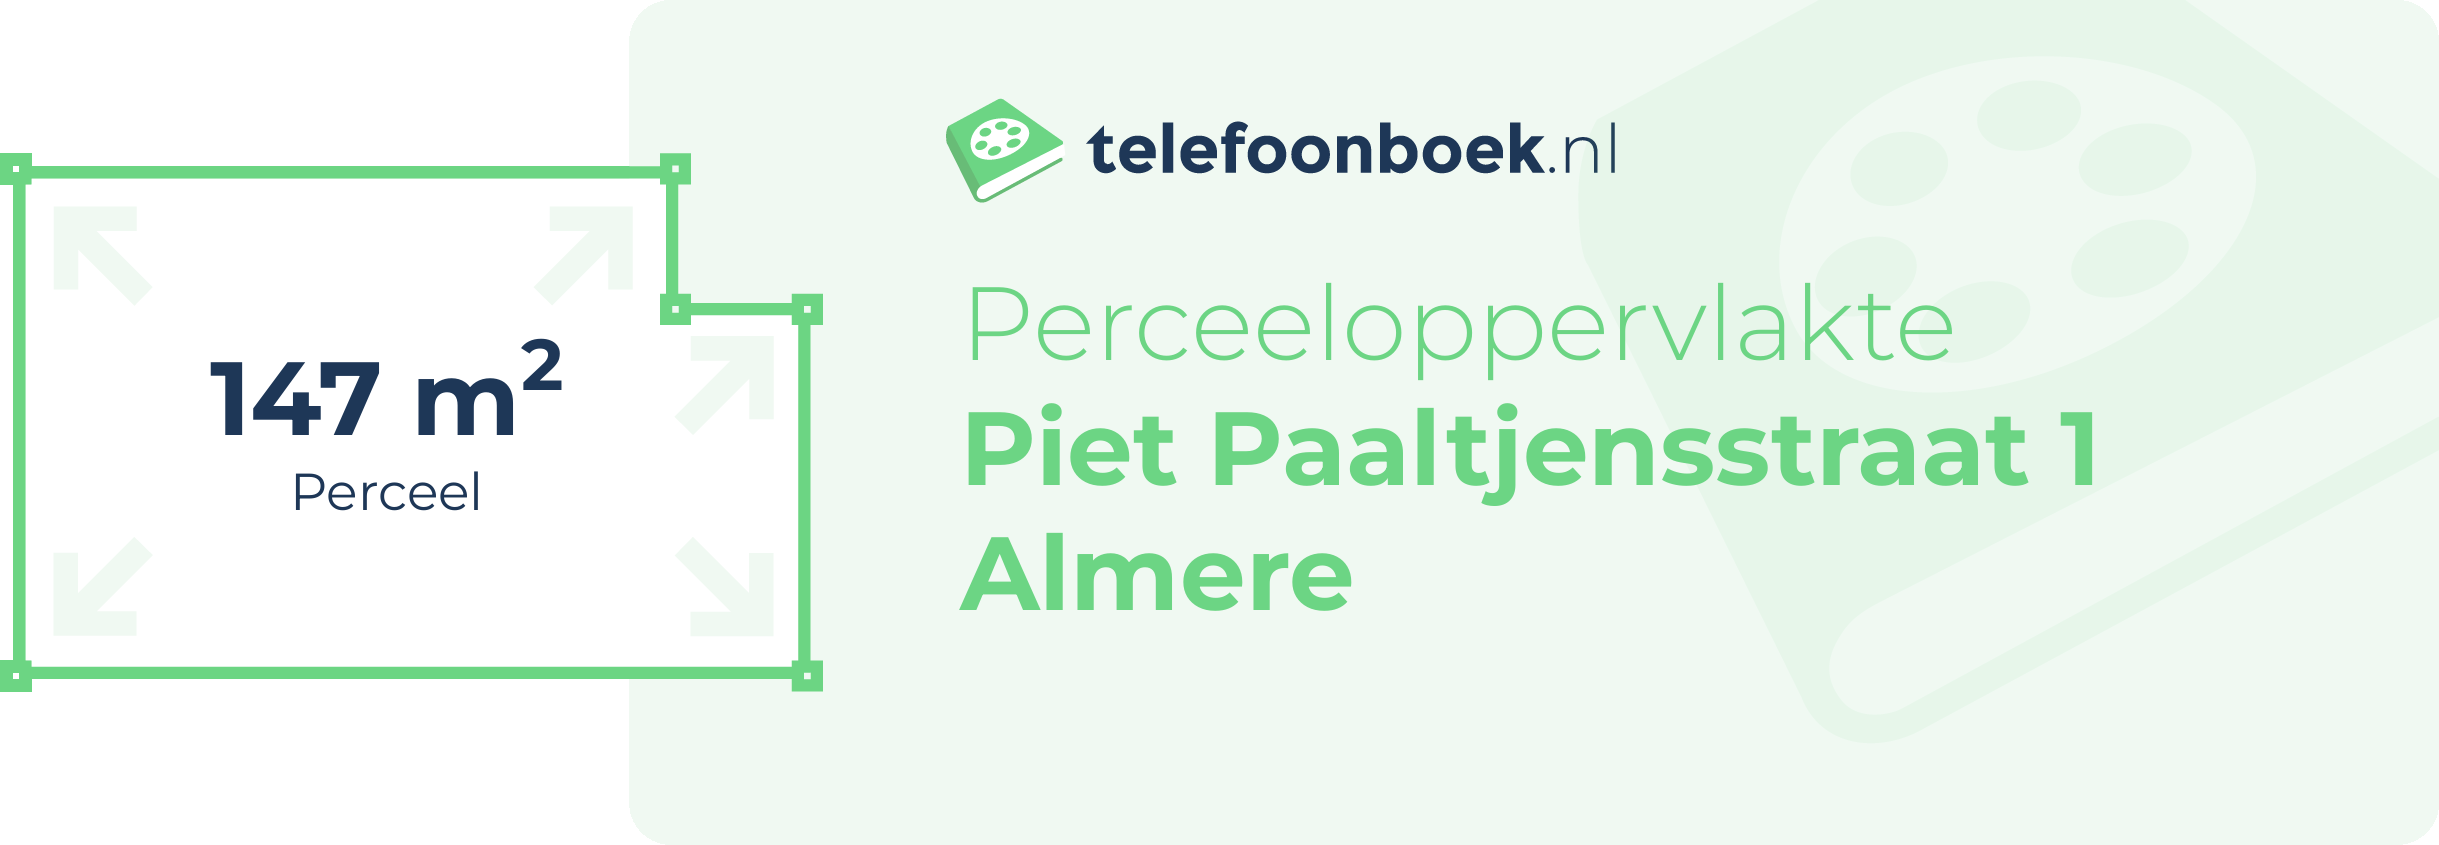 Perceeloppervlakte Piet Paaltjensstraat 1 Almere